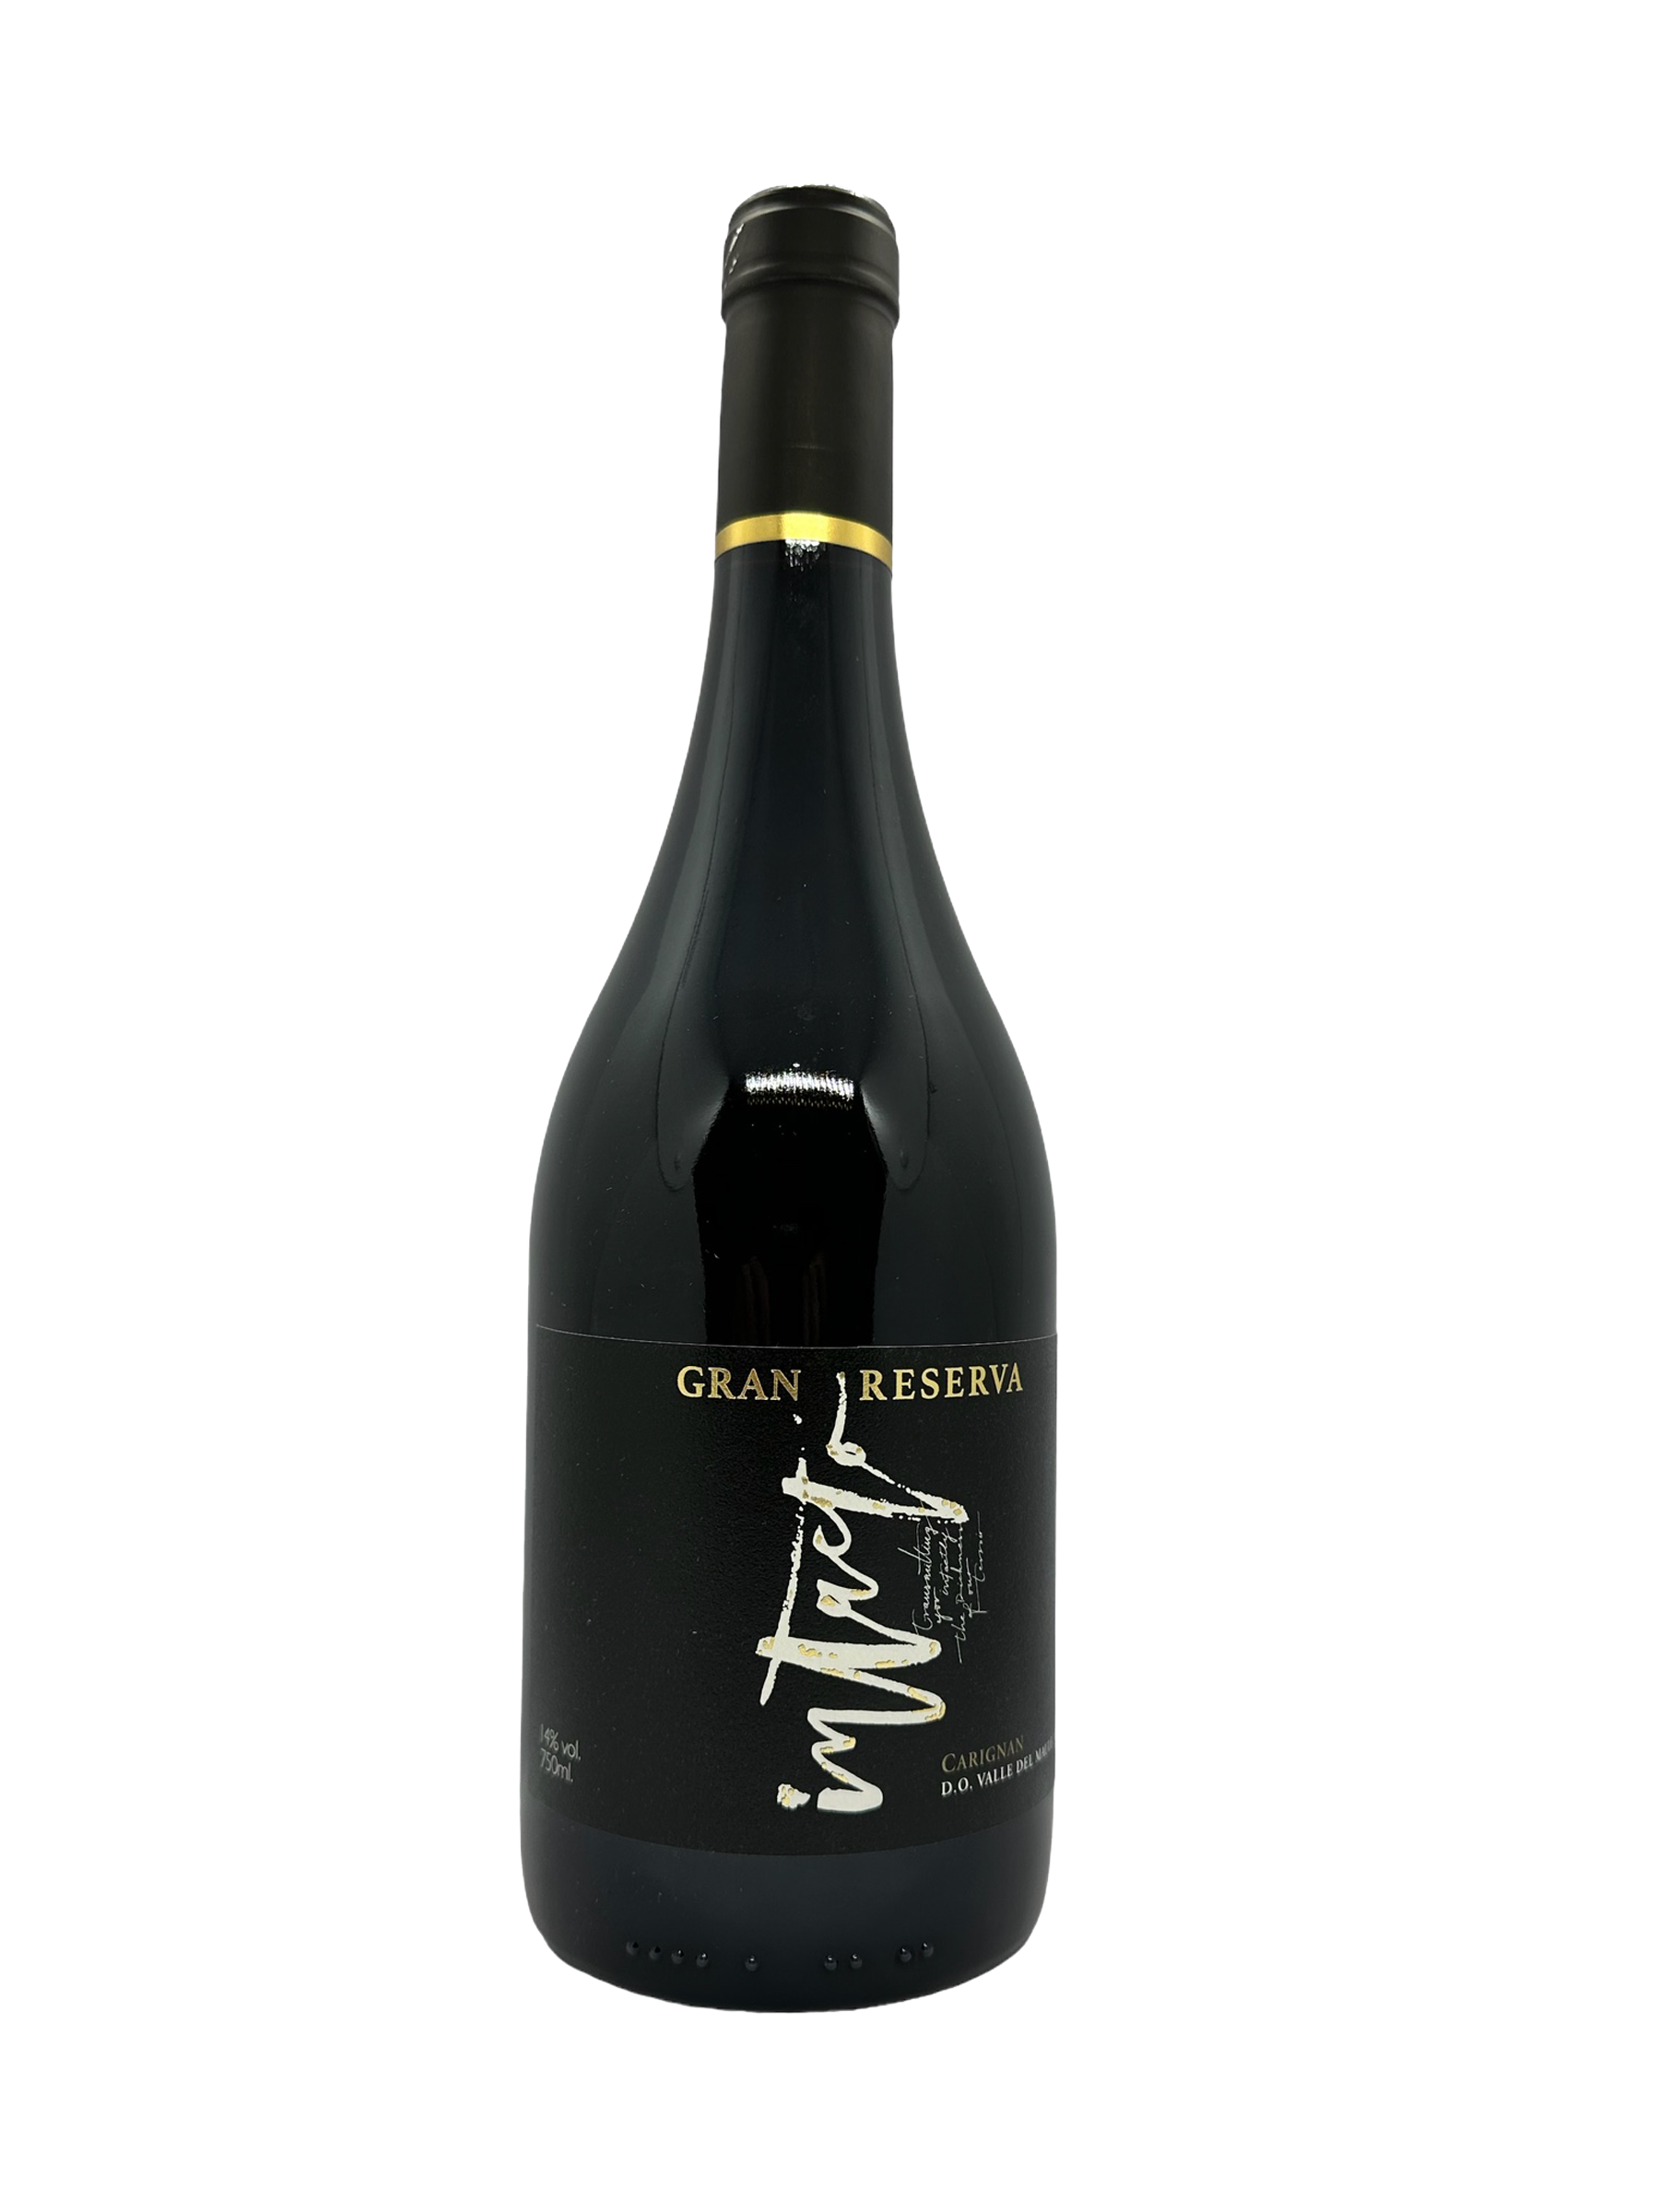 Intacto “Gran Reserva” Pinot Noir